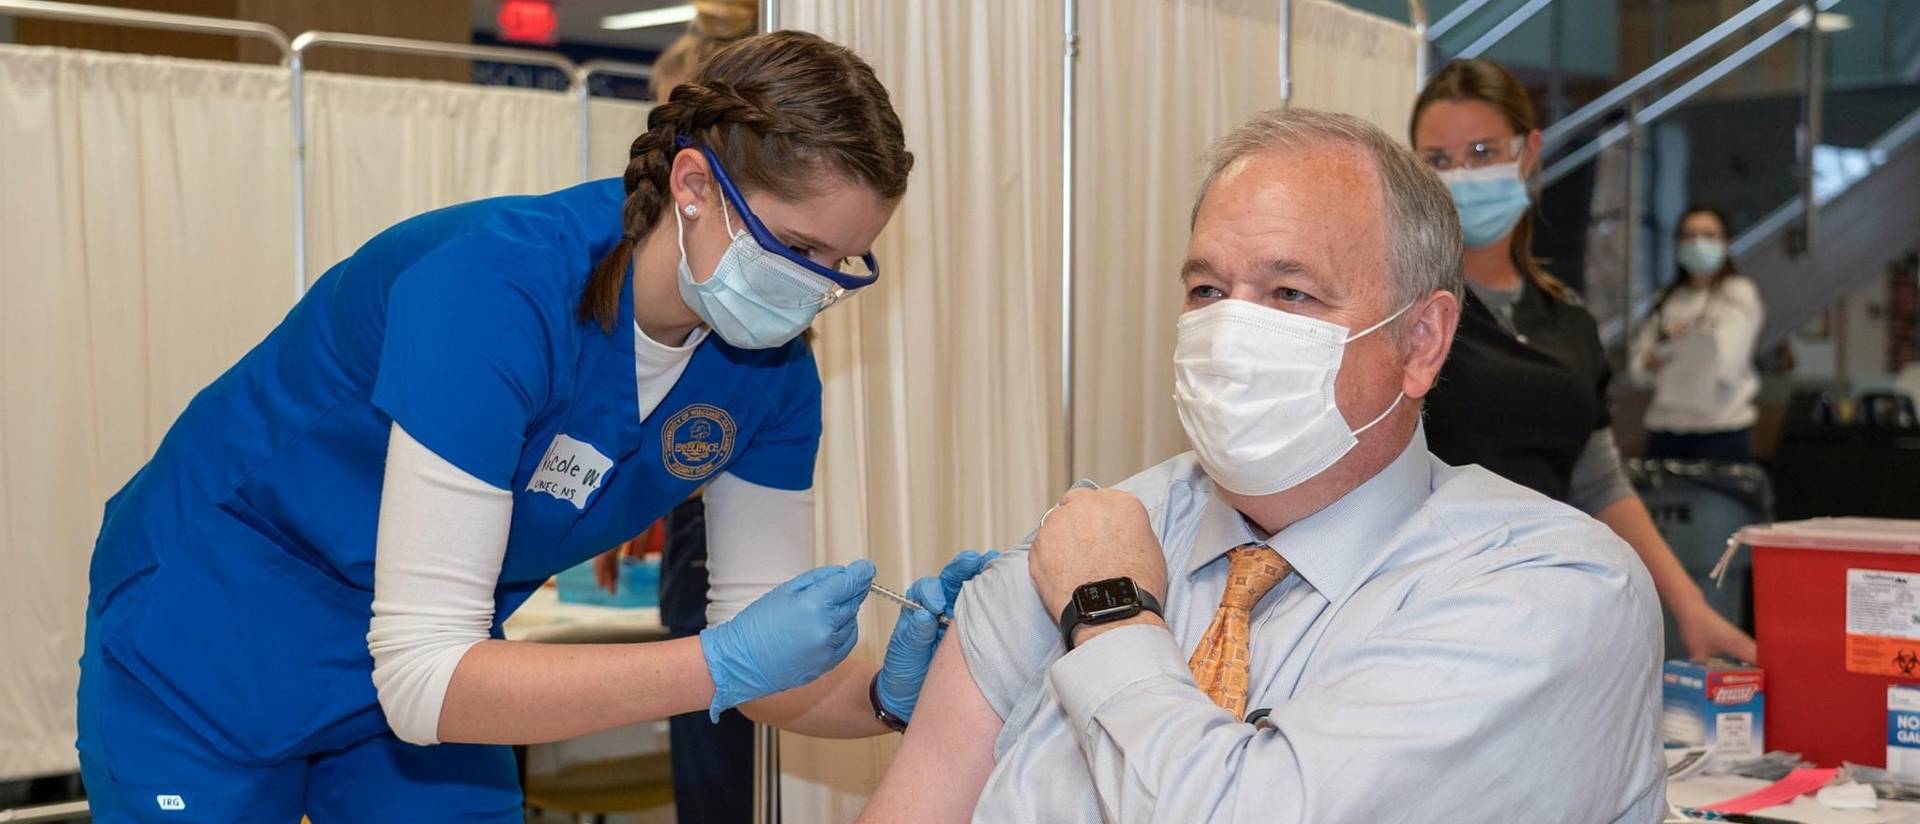 Chancellor Schmidt receiving a vaccination from a nursing student